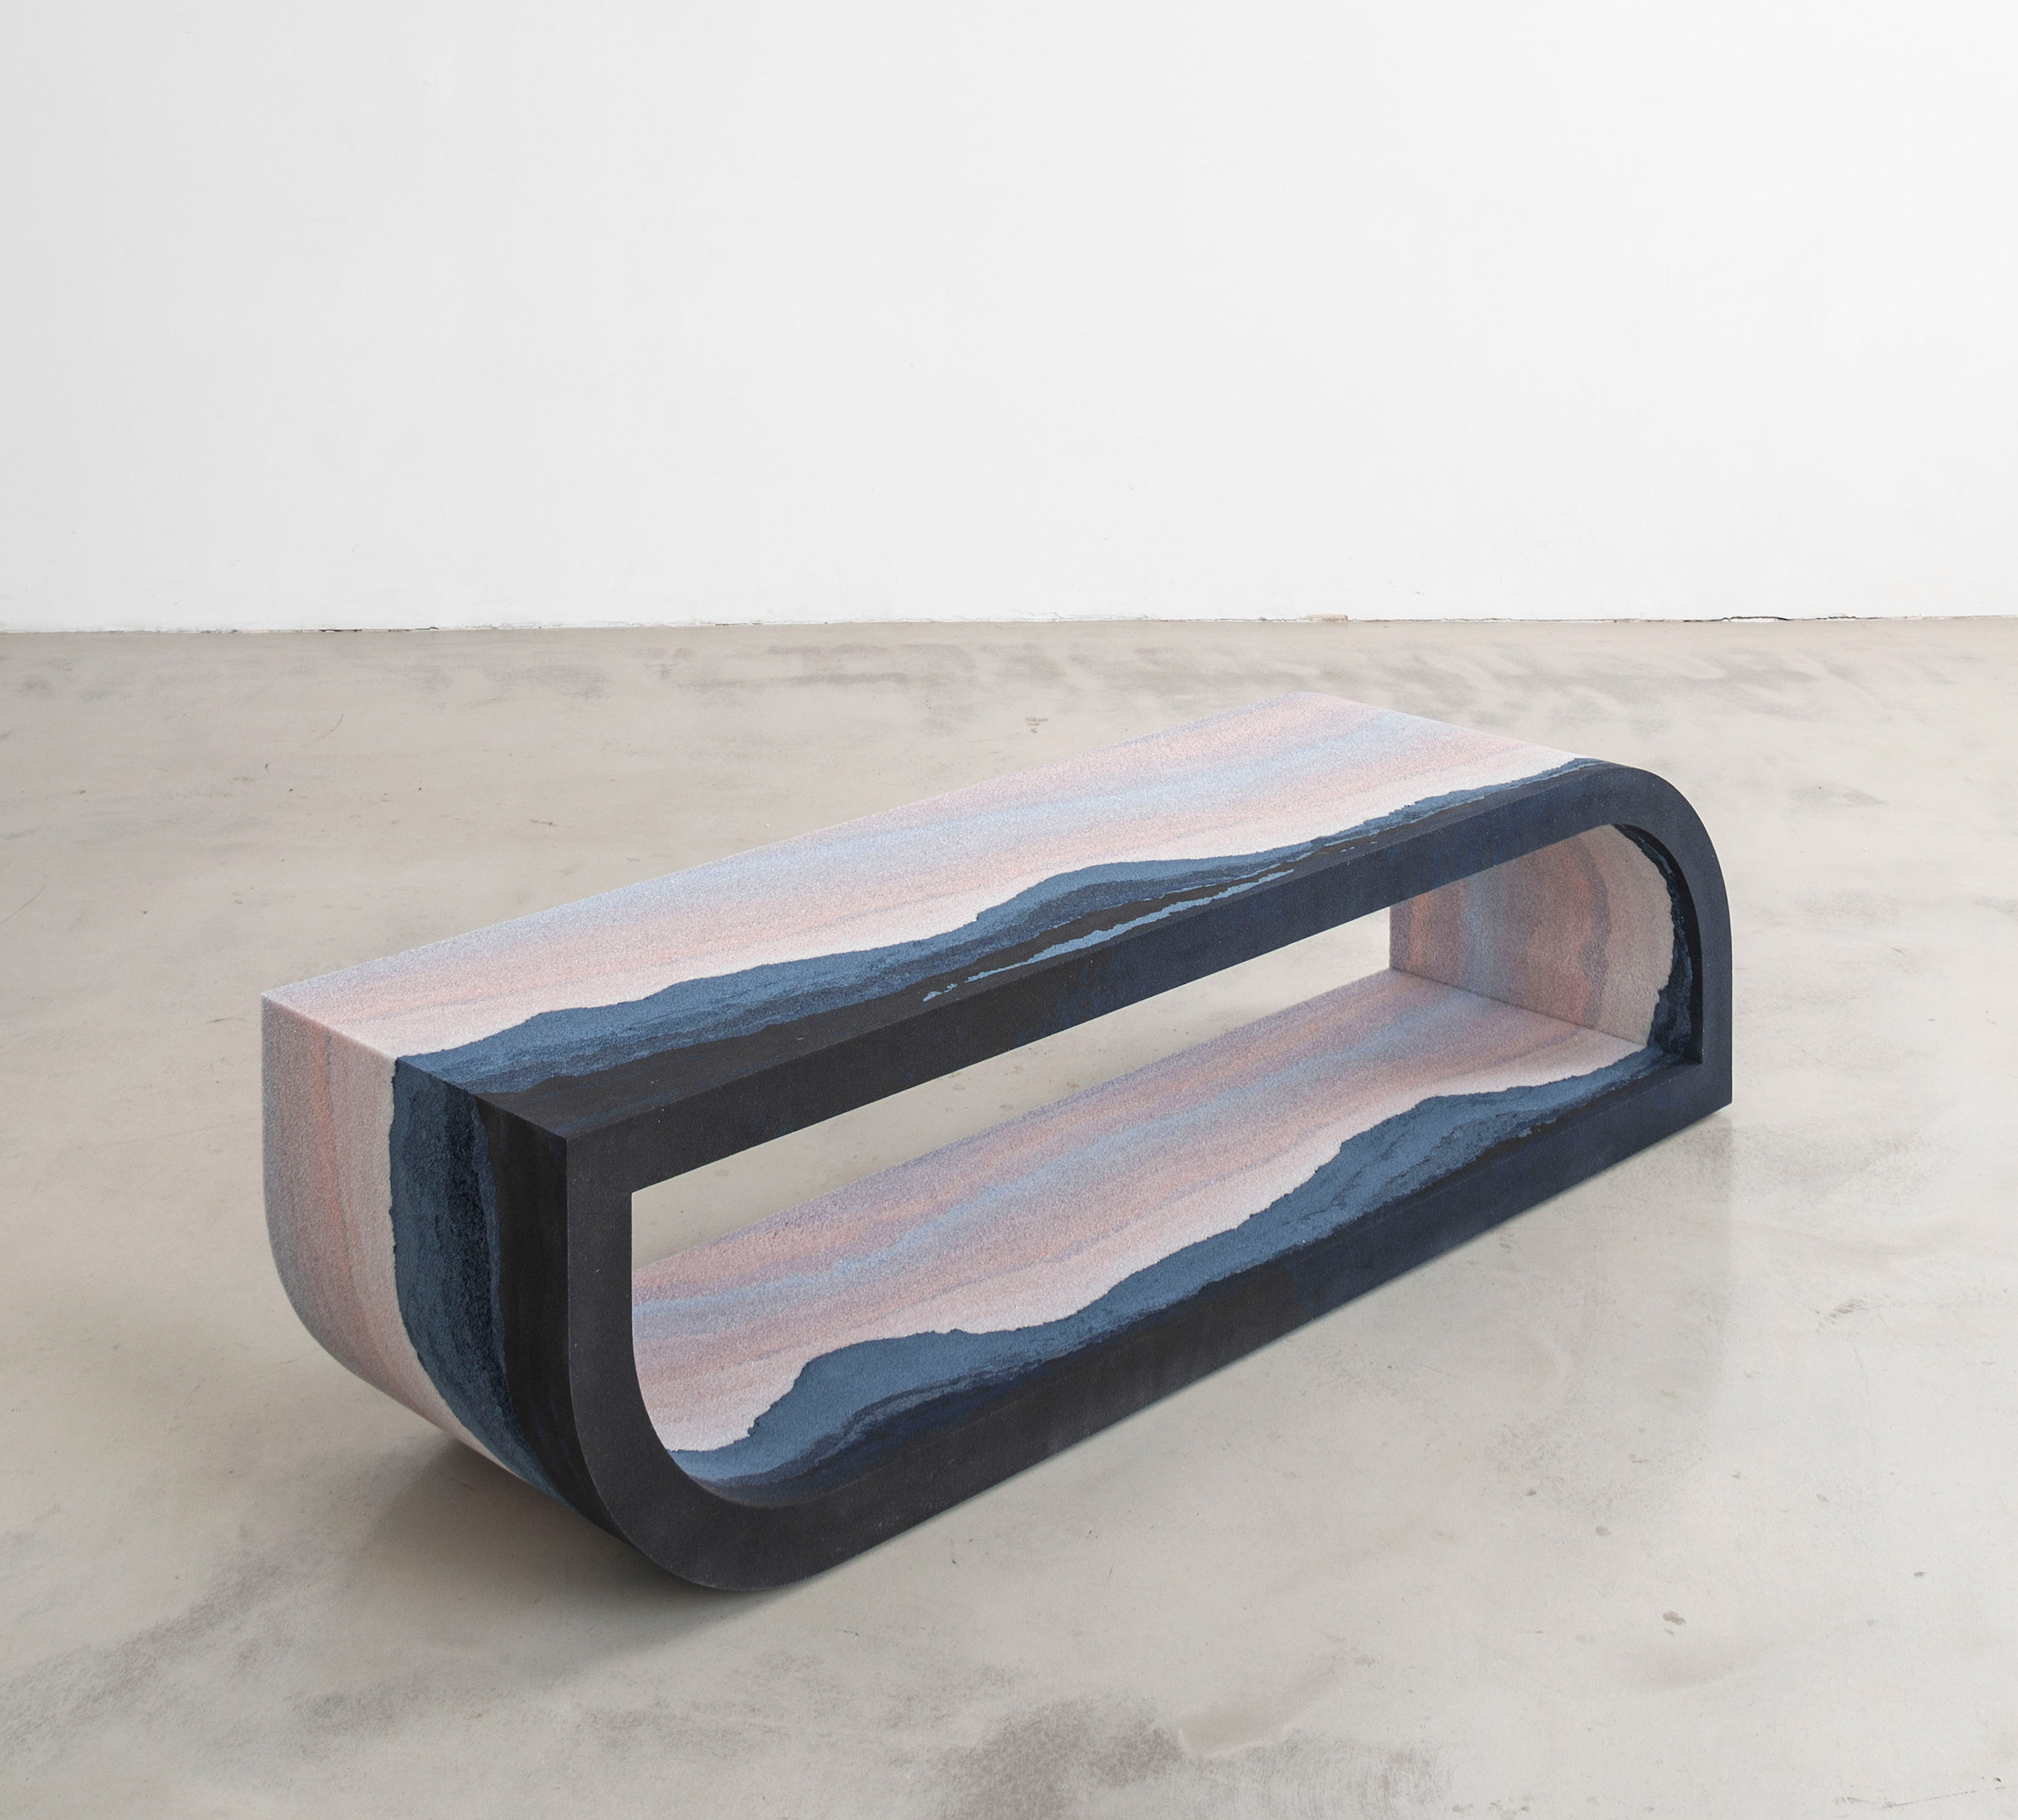 Fernando Mastrangelo's Escape furniture evokes landscapes through coloured gradients